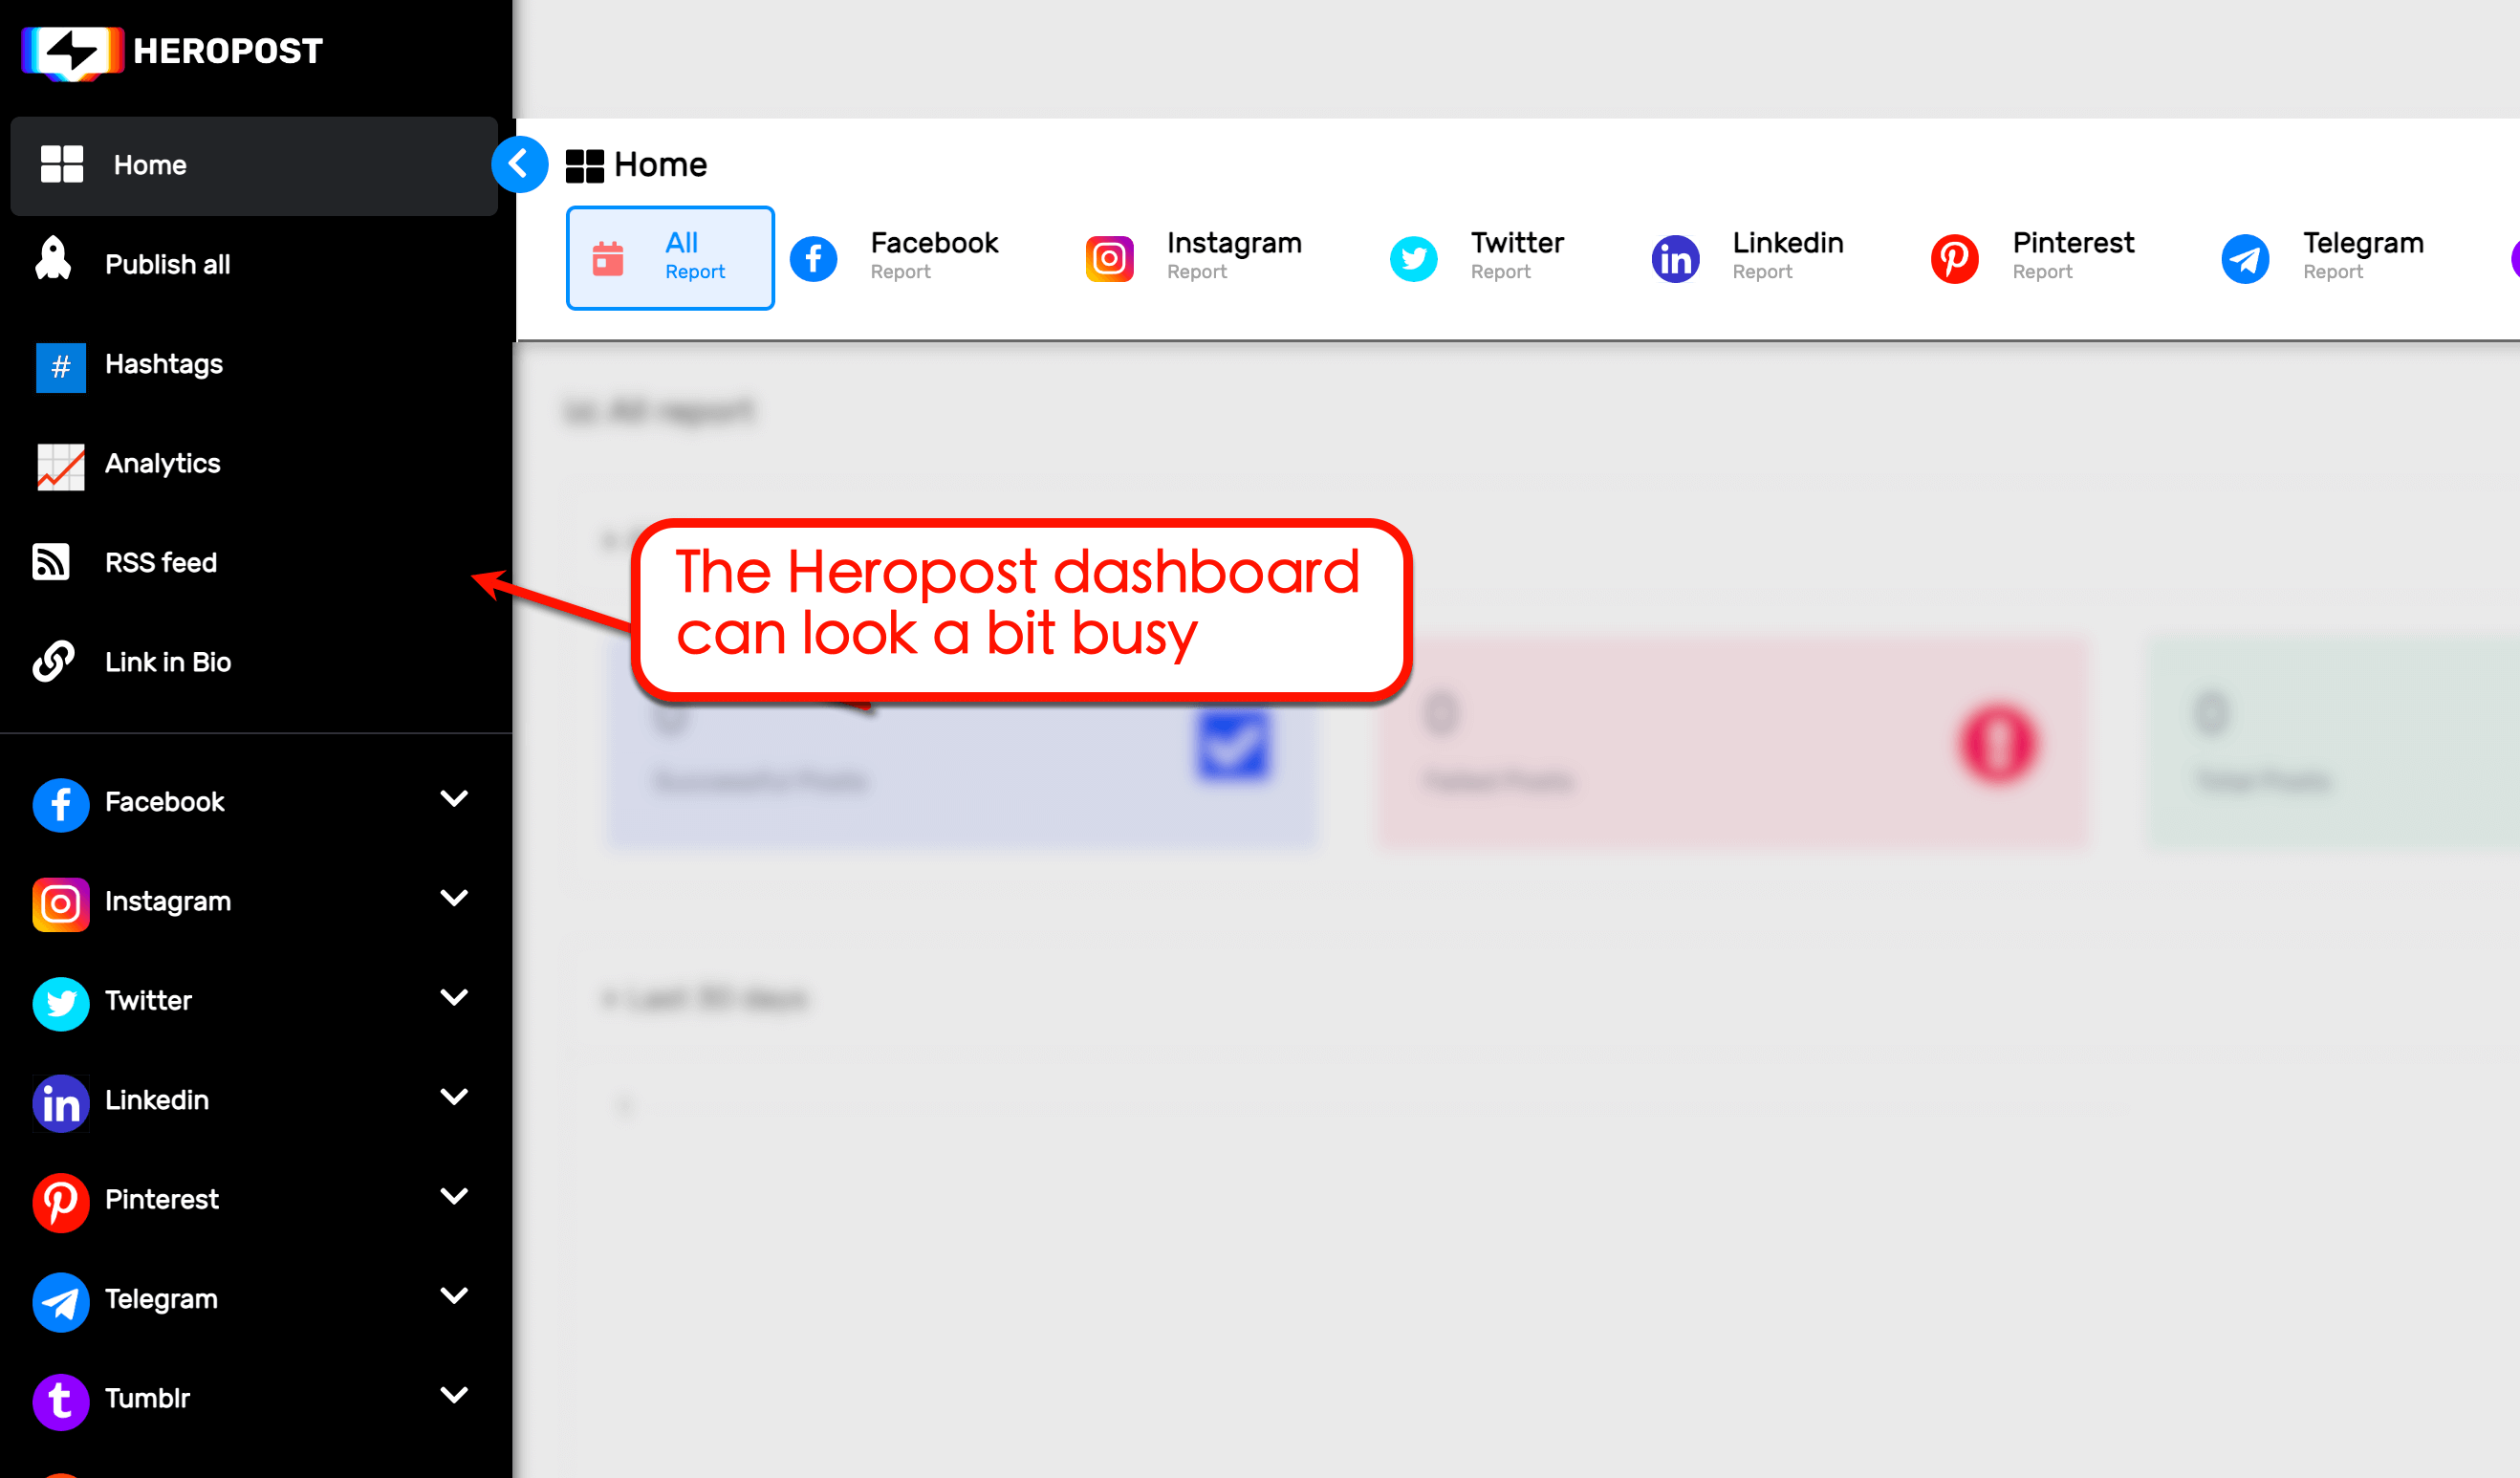 Heropost's dashboard